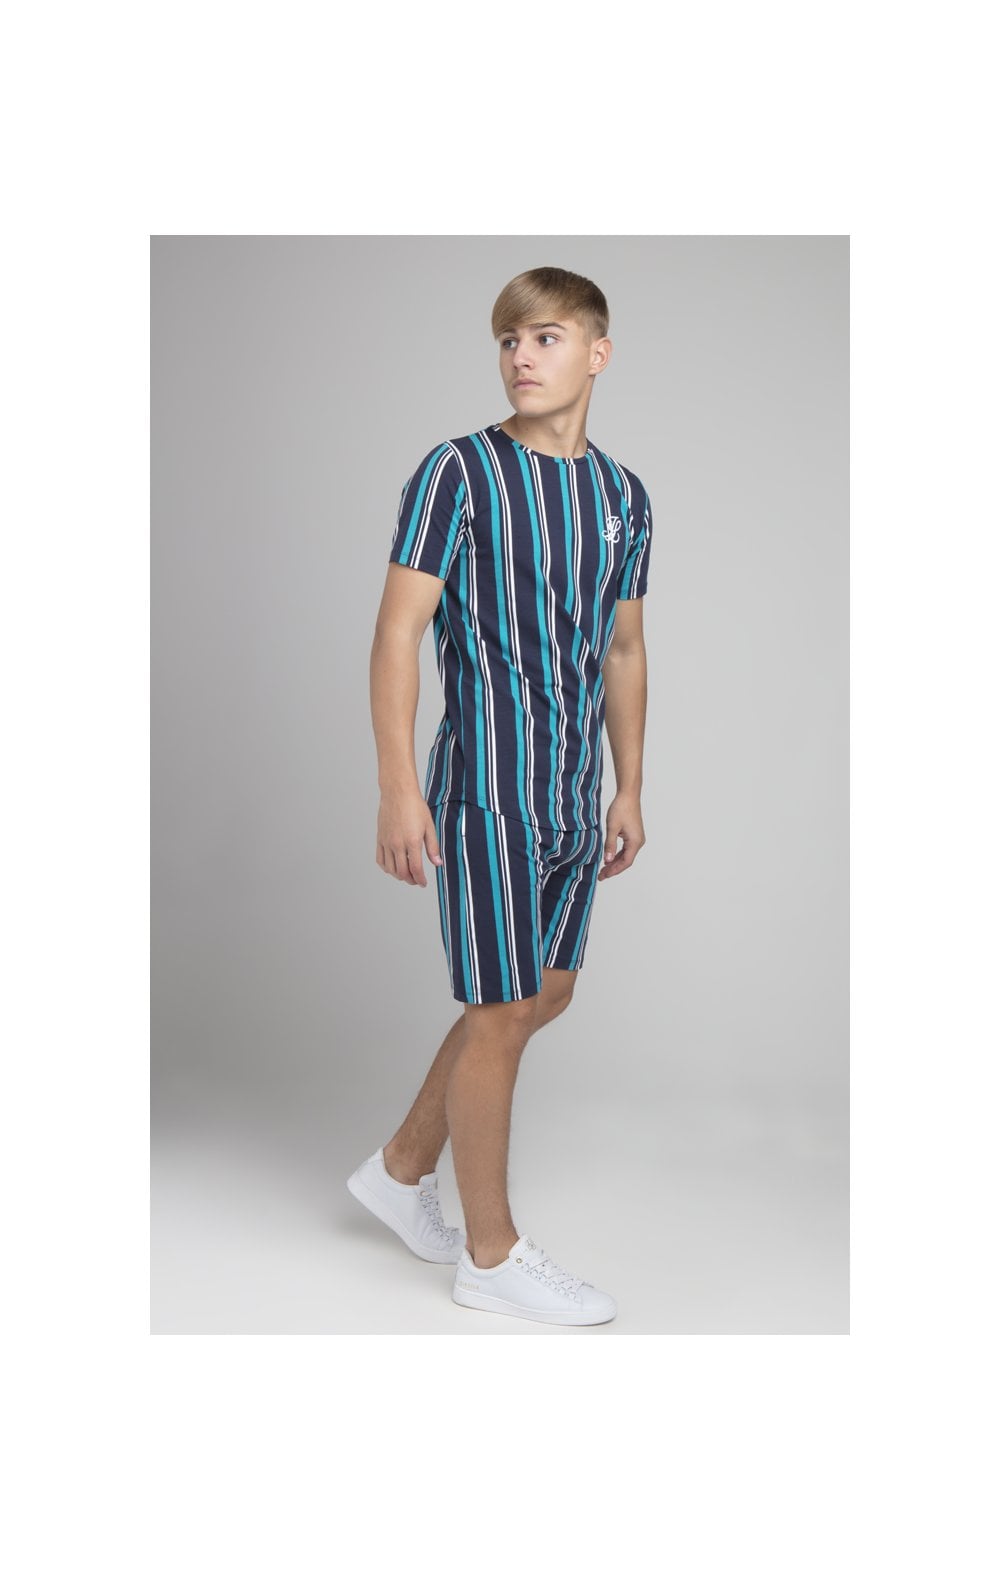 Illusive London Stripe Shorts - Navy & Teal (4)